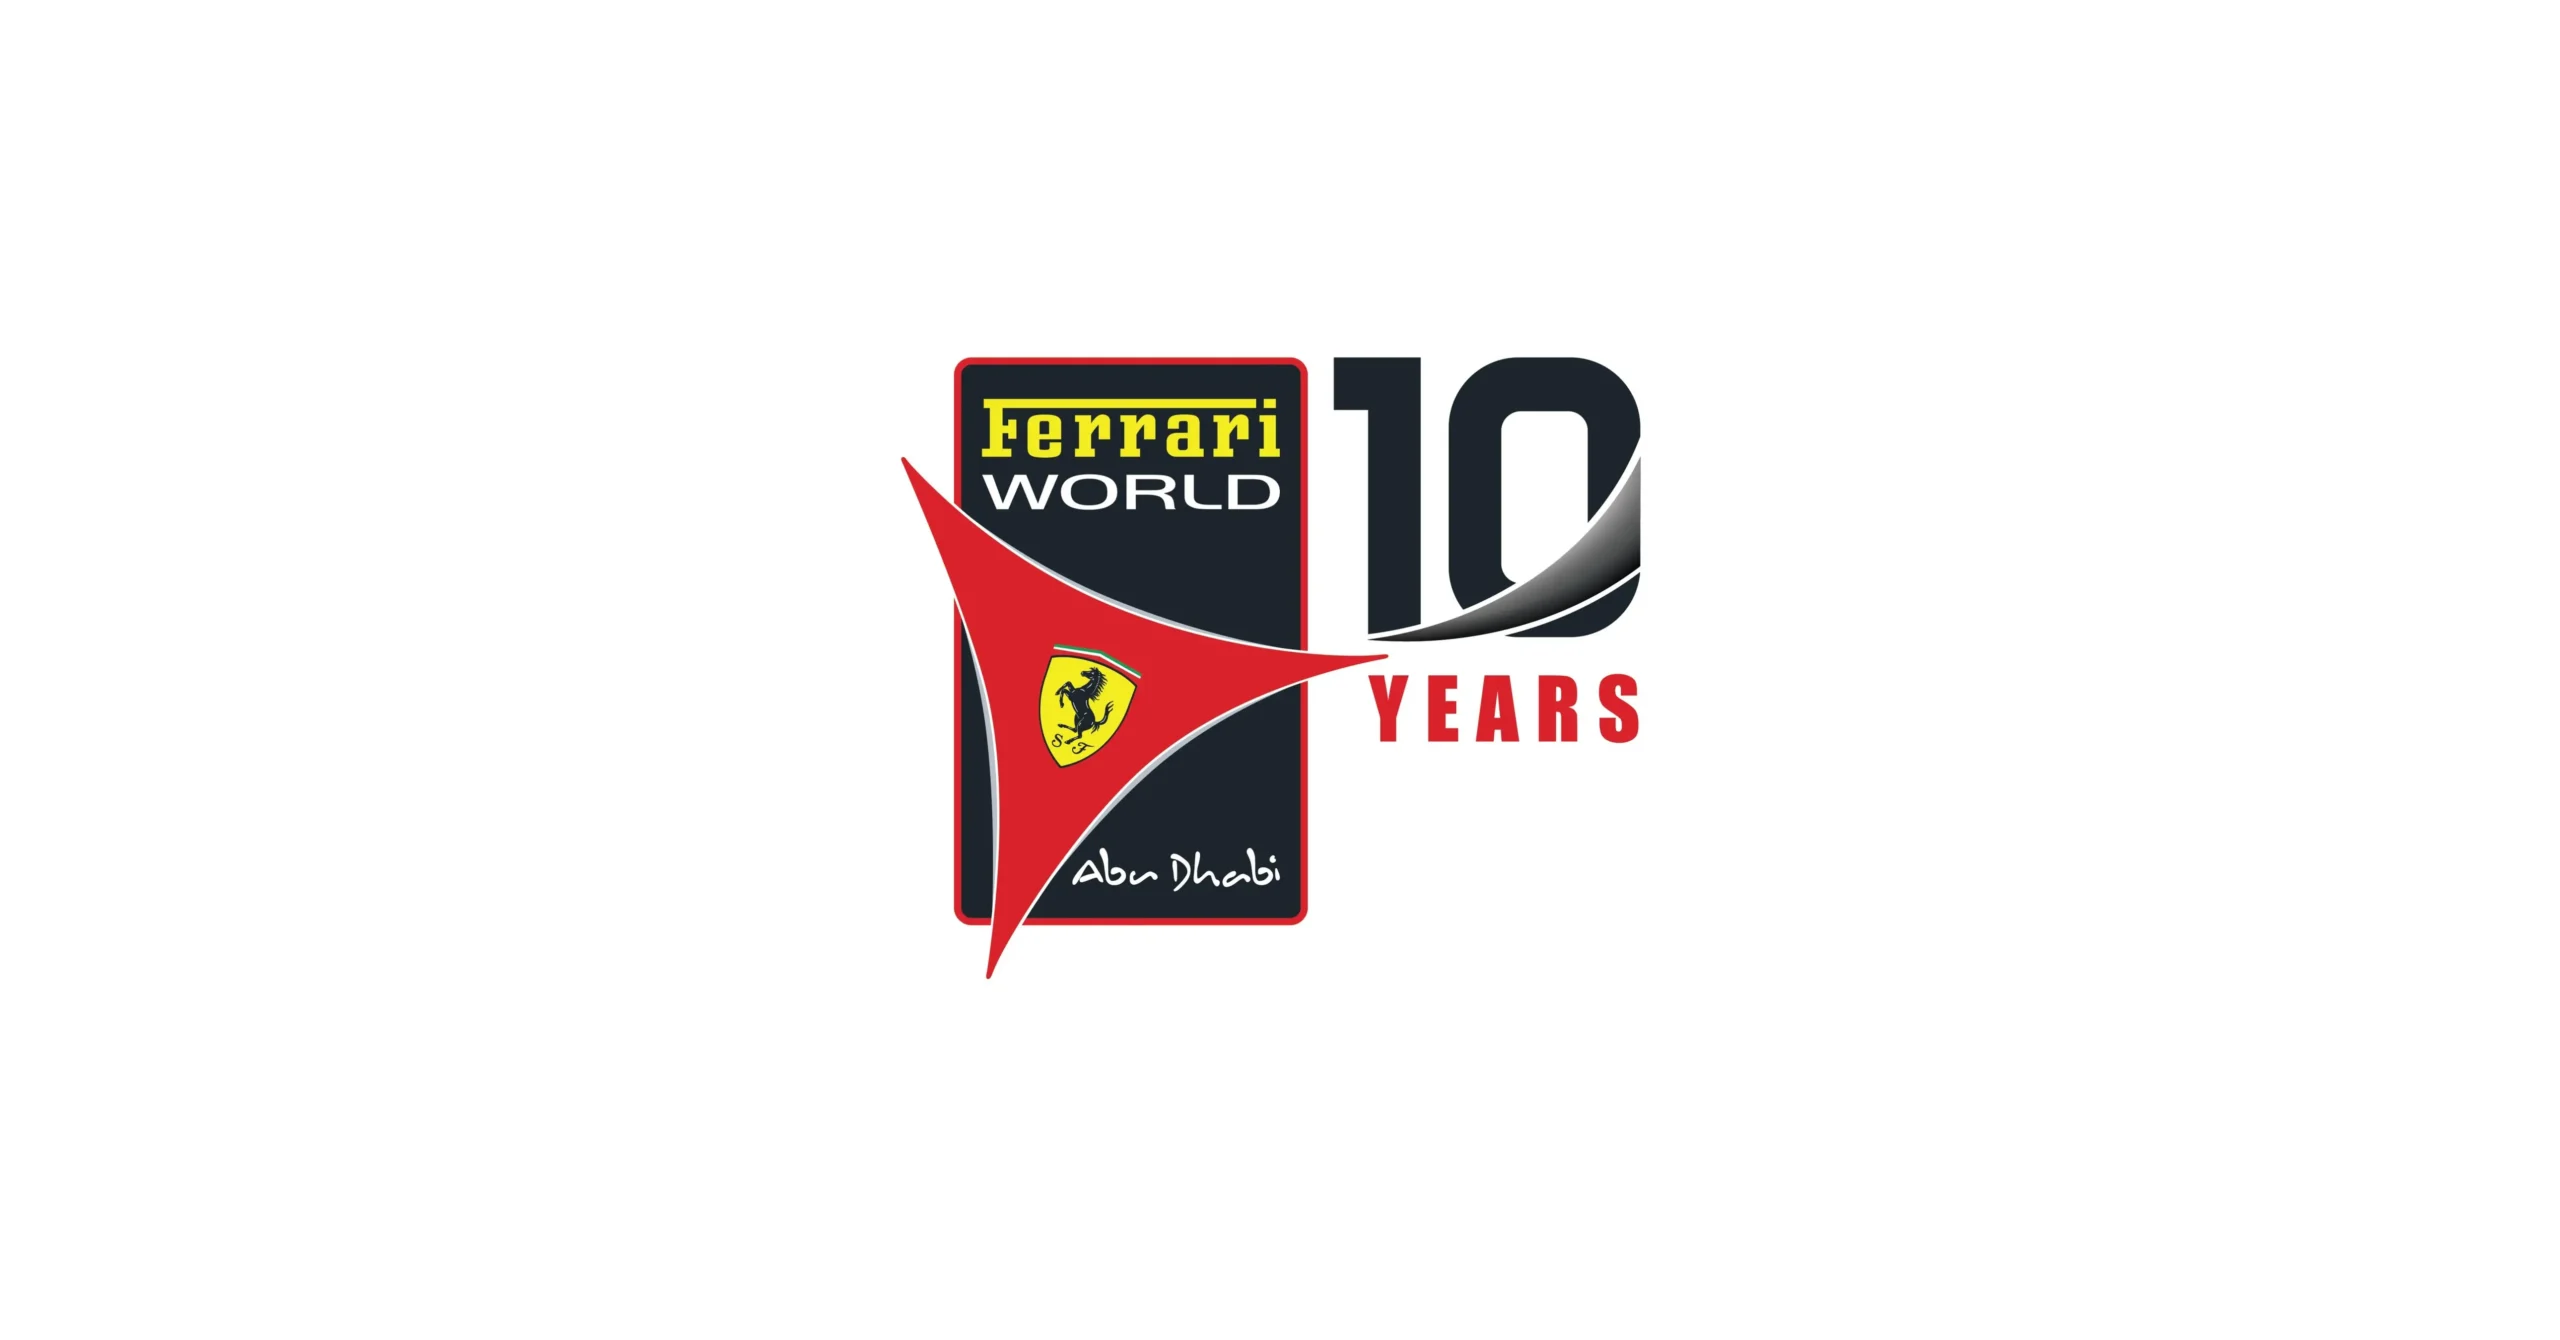 ferrari world abu dhabi logo - What is the worlds largest Ferrari logo